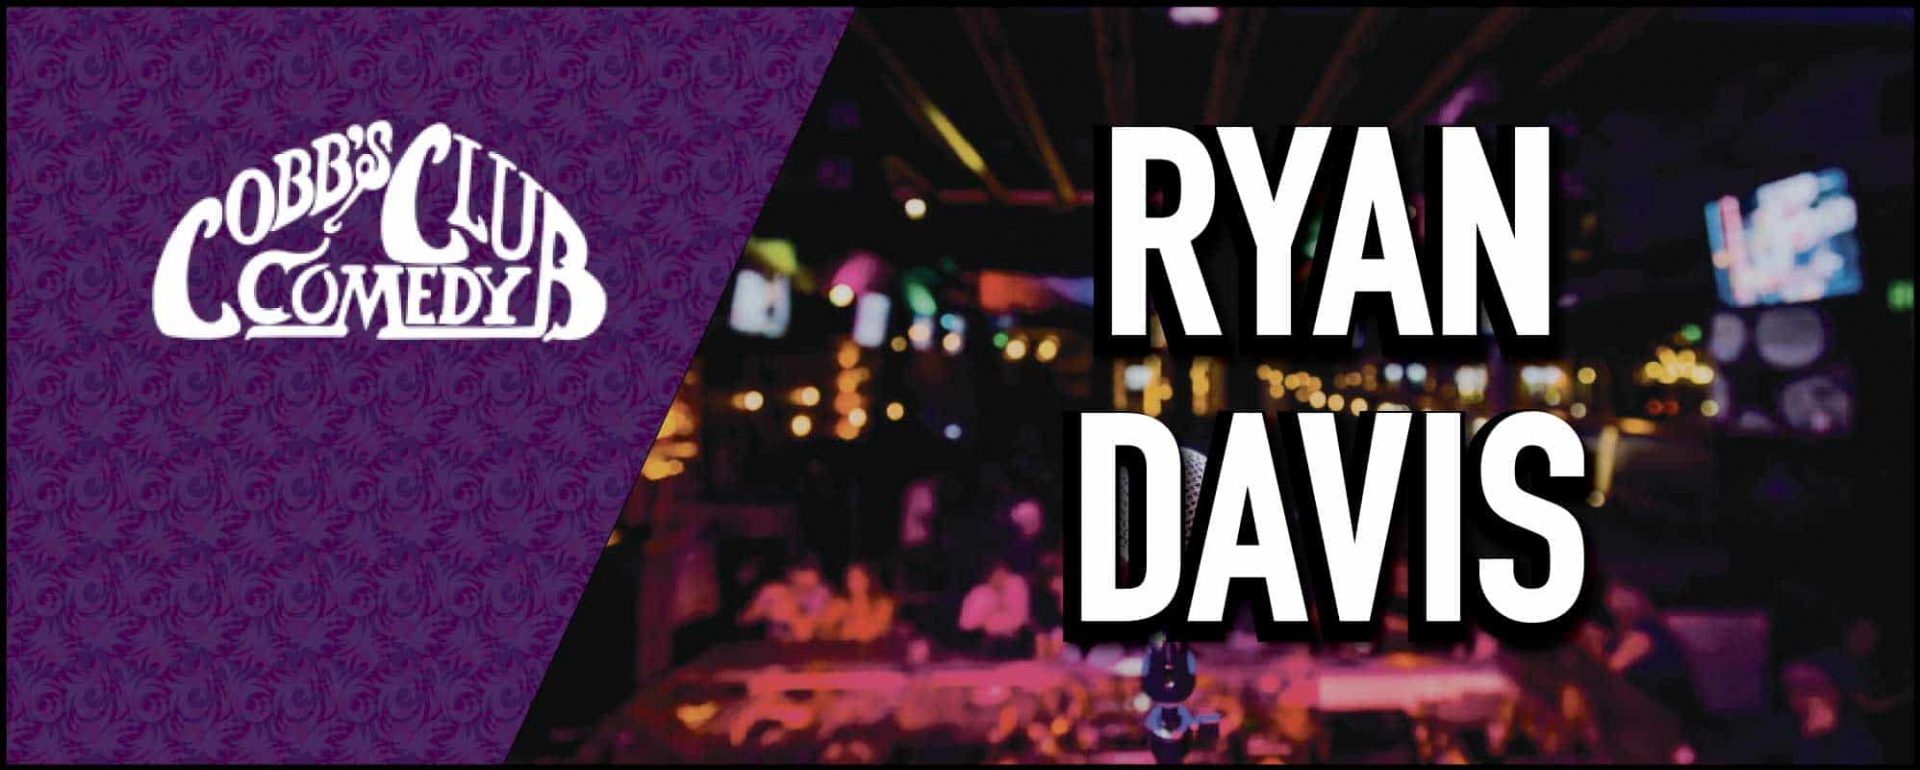 Ryan Davis Live at Cobbs